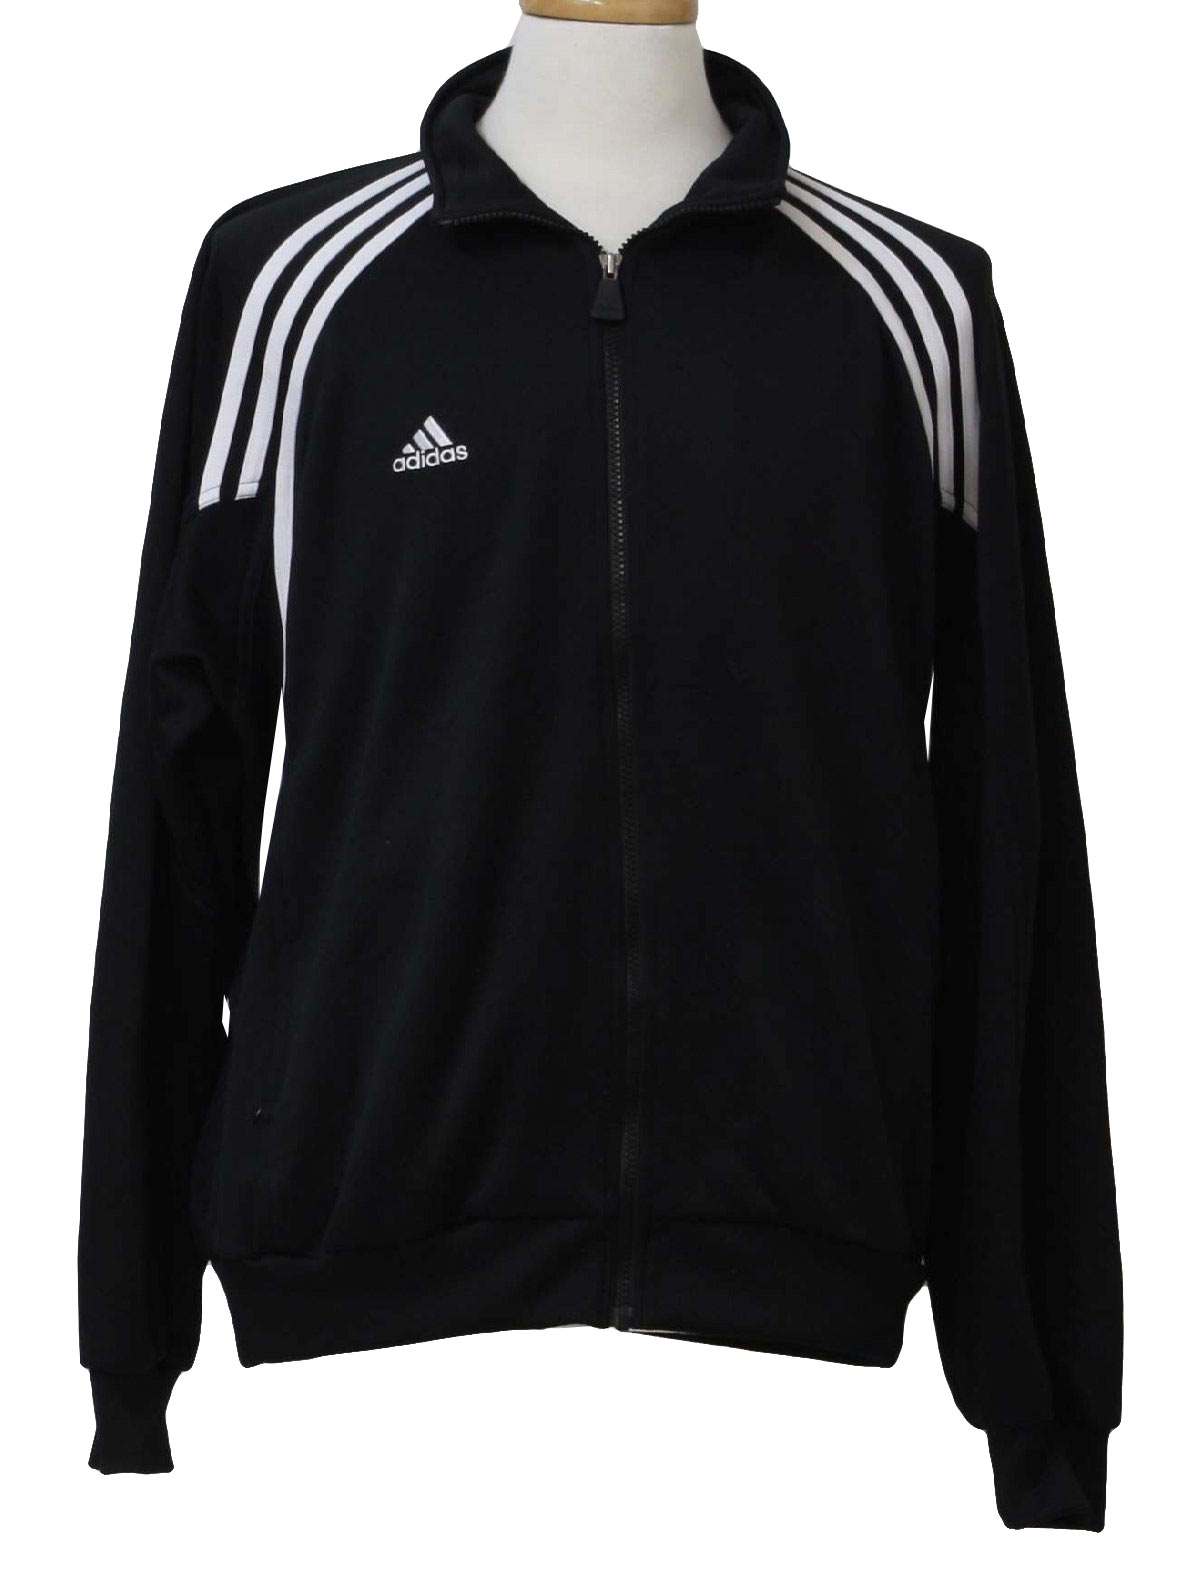 Vintage Adidas Nineties Jacket: 90s -Adidas- Mens black and white down ...